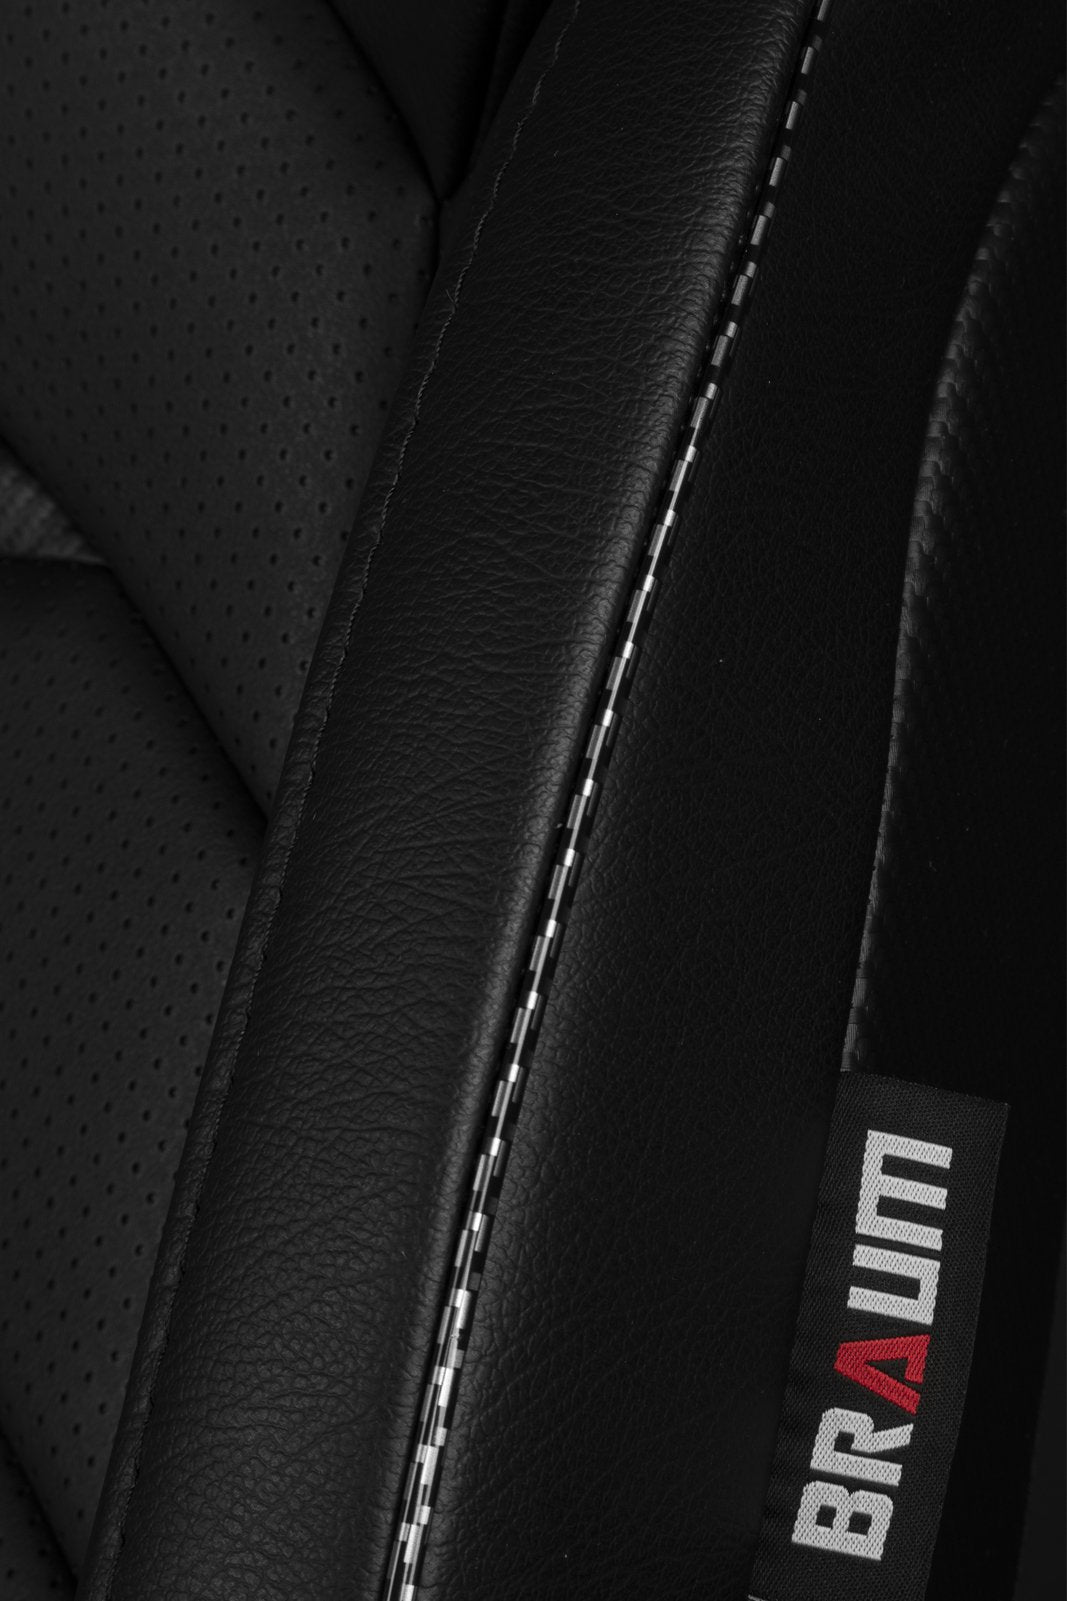 Braum Alpha-X Series Racing Seats - Black & Carbon Fiber (PAIR) - Lowered Lifestyle